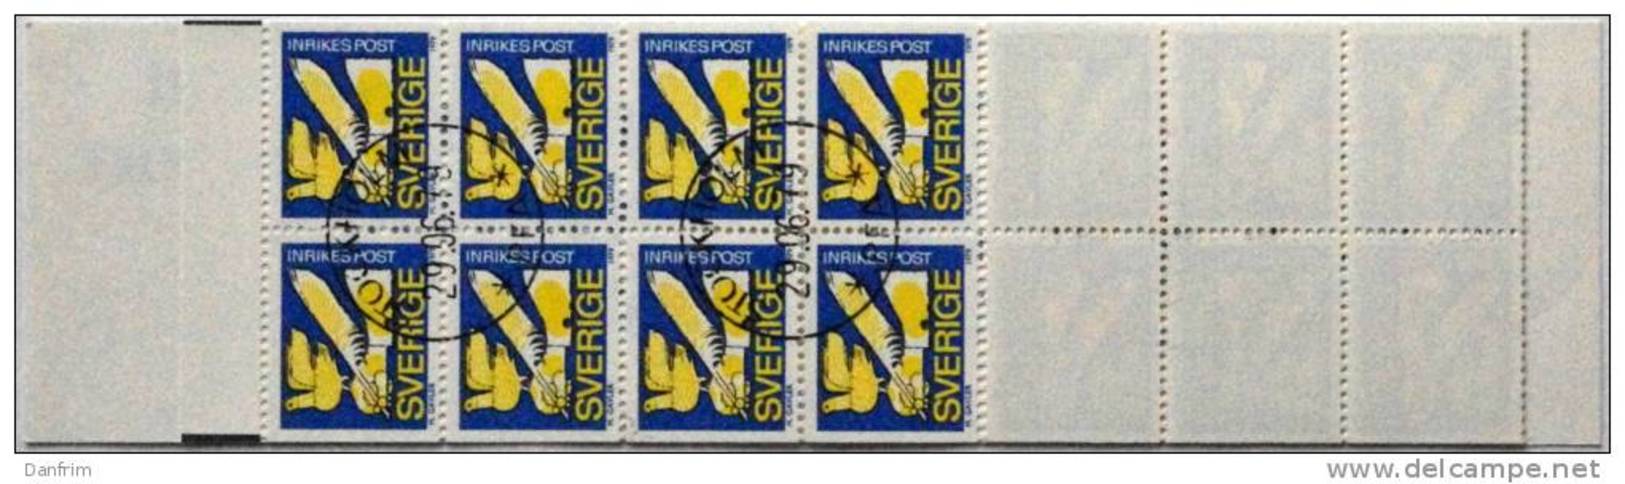 Sweden 1979 Rabatt-Freimarke    Markenheftchen 20x   MiNr.1057D (0)  ( Lot Ks 168 ) - 1951-80